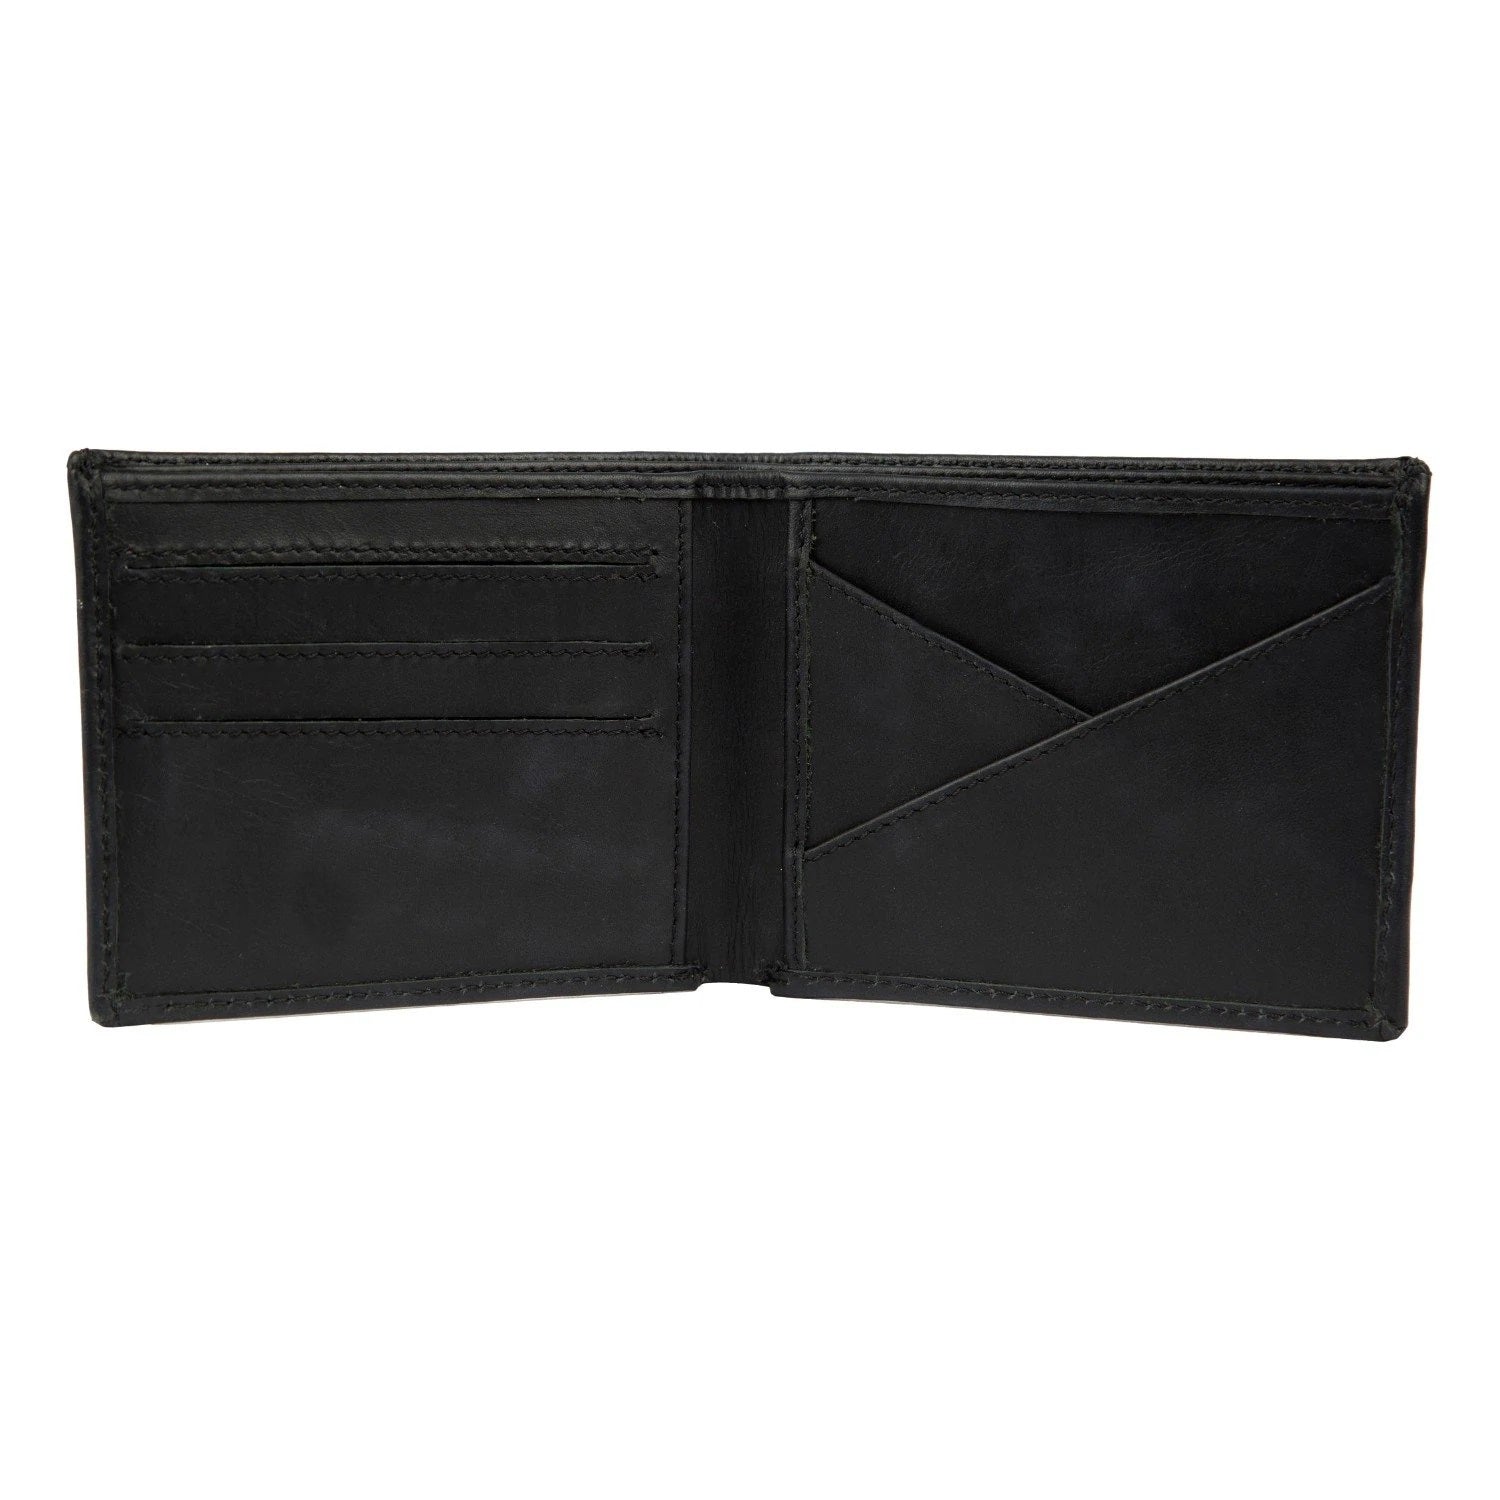 Black Leather Wallet for Him